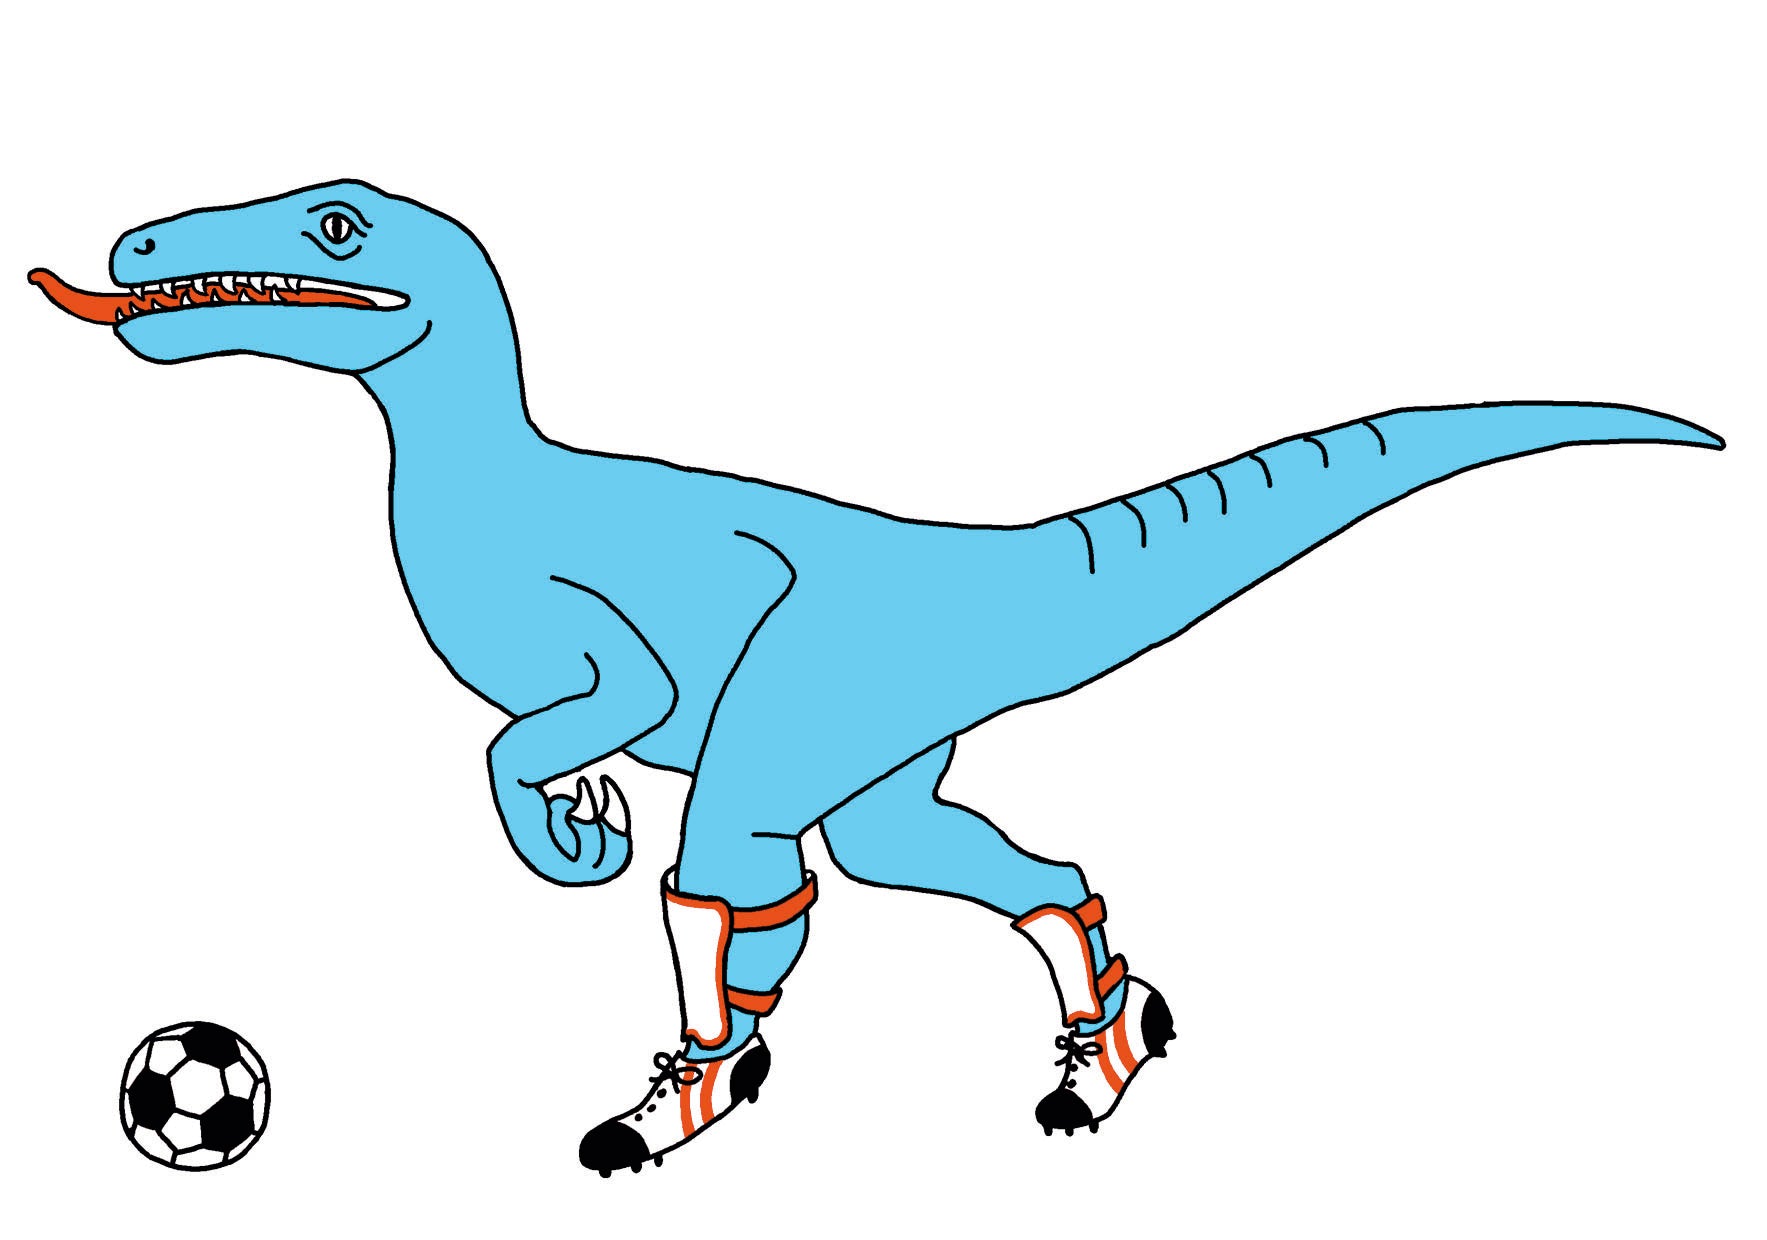 Dinosaur greetings card